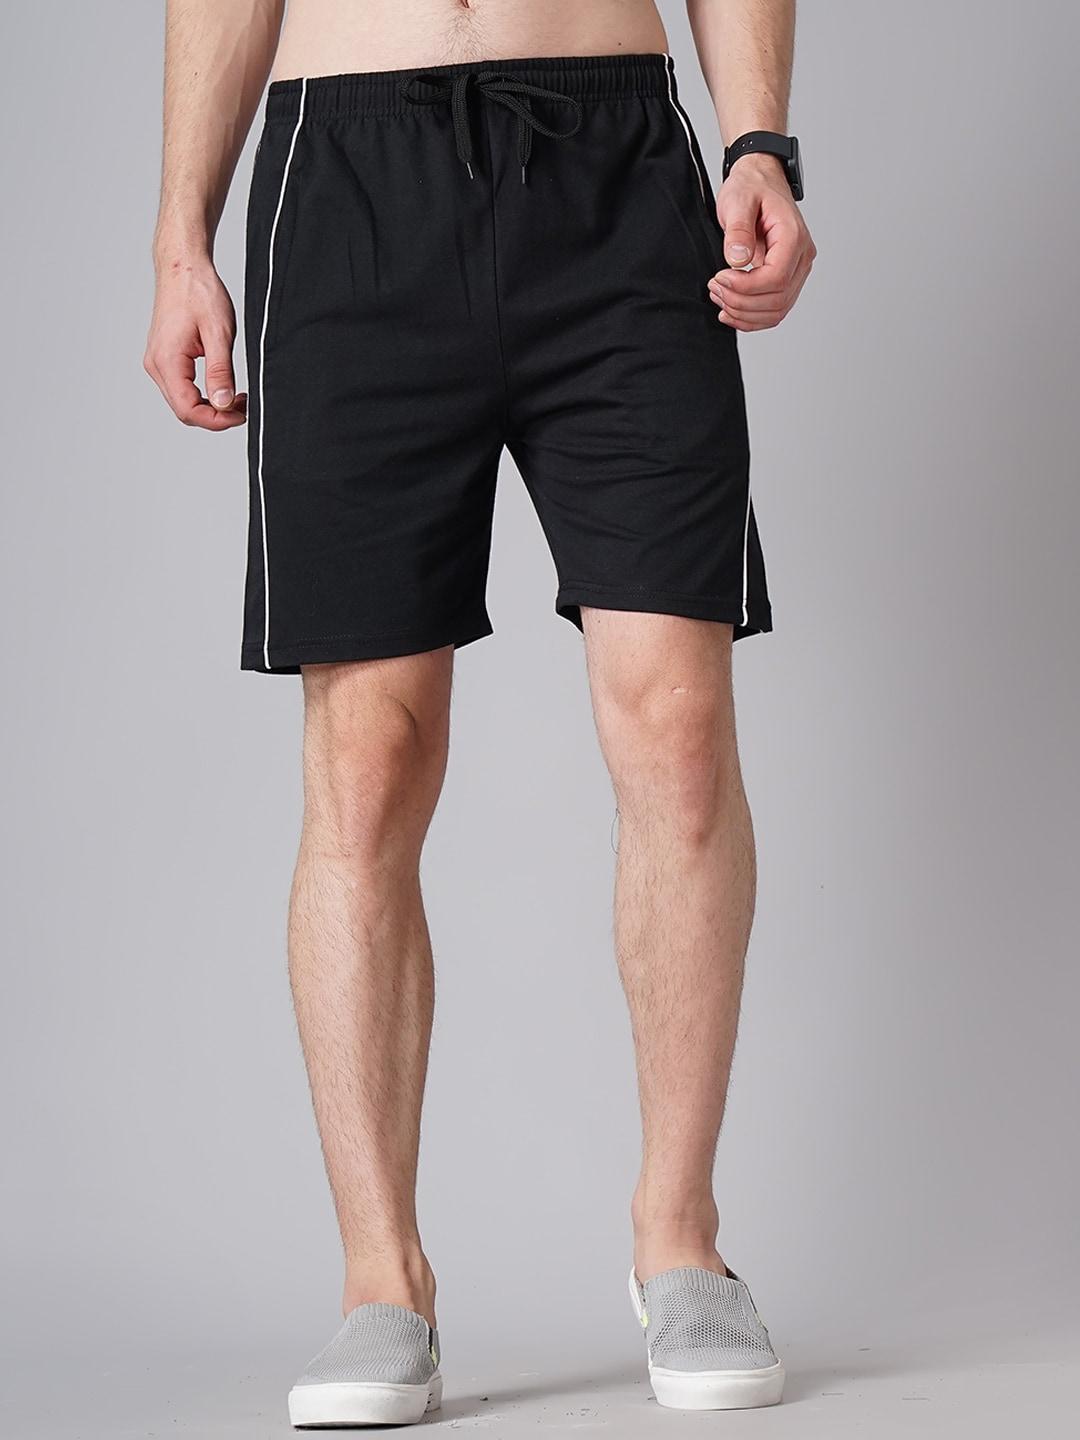 madsto-men-cotton-slim-fit-shorts